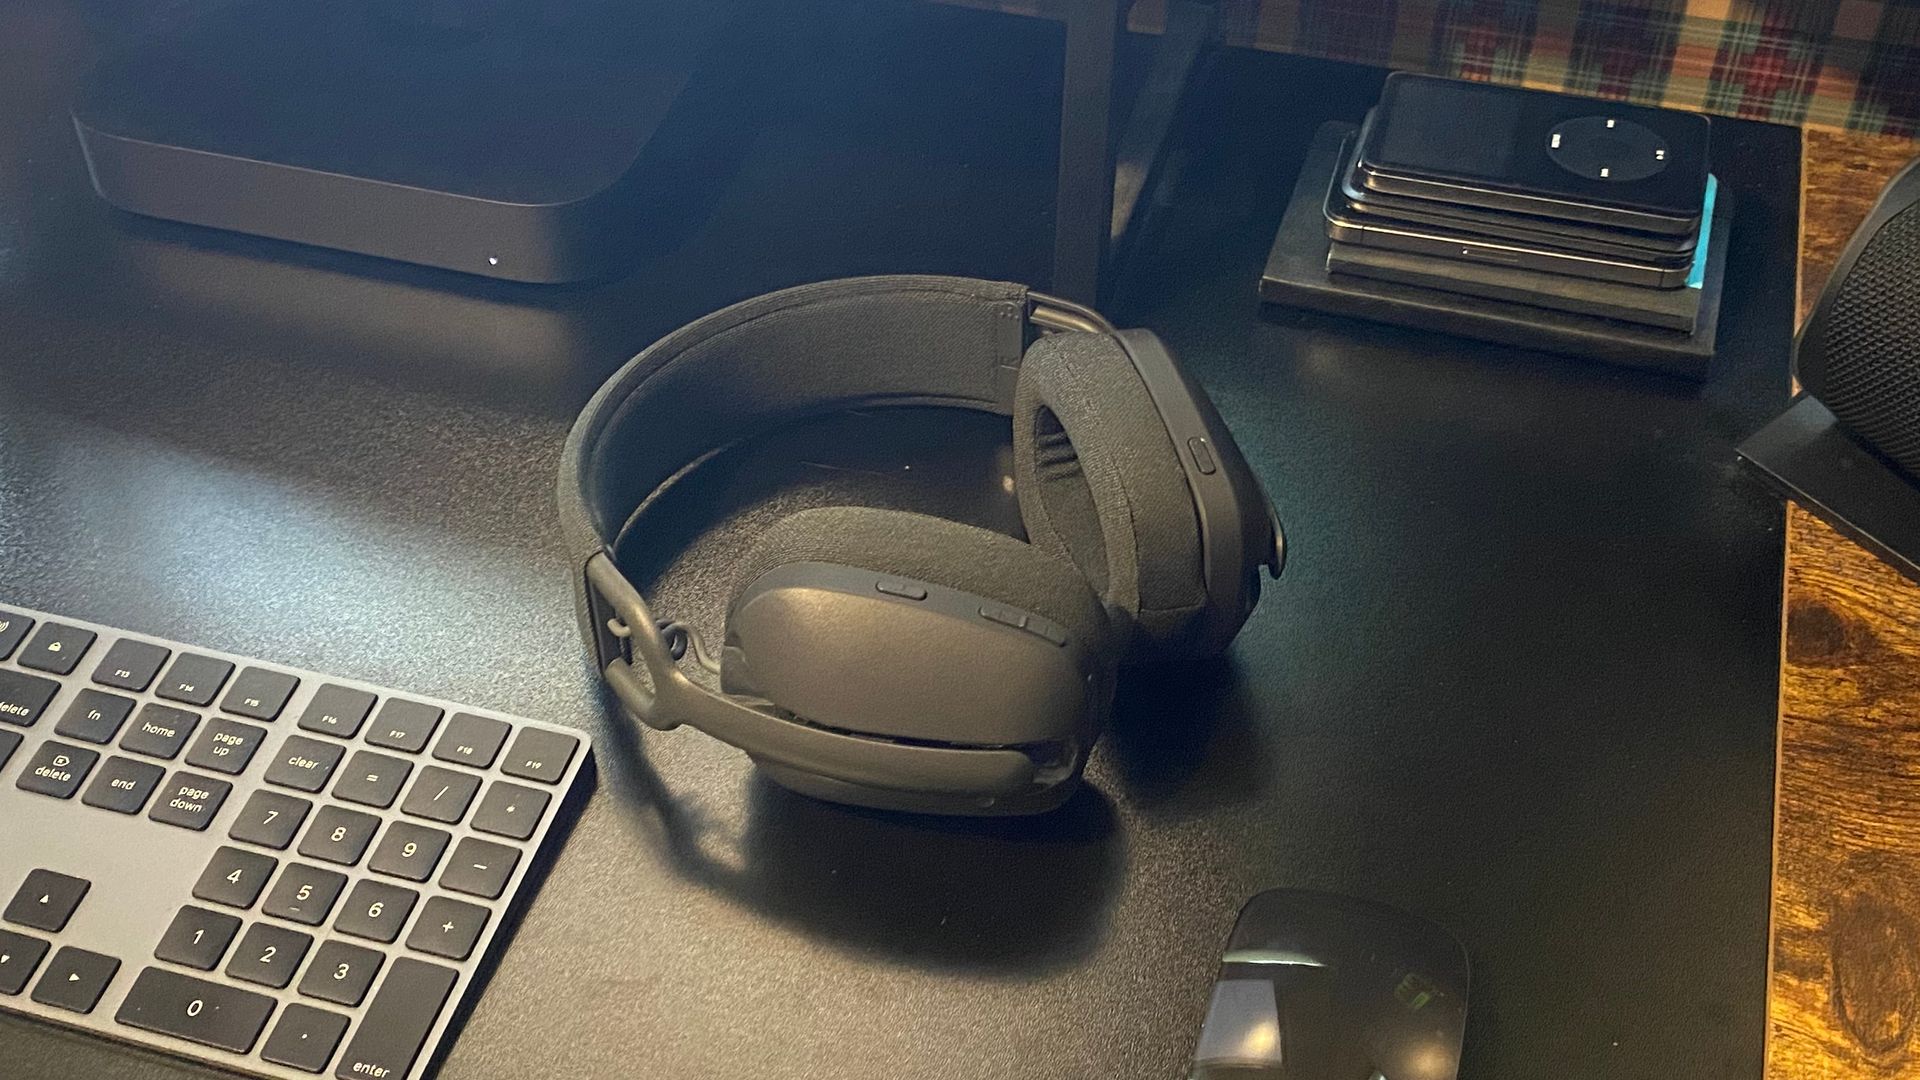 Zone Vibe 100 headphones sitting on a desk next to a Magic Keyboard, Magic Mouse, and Mac mini